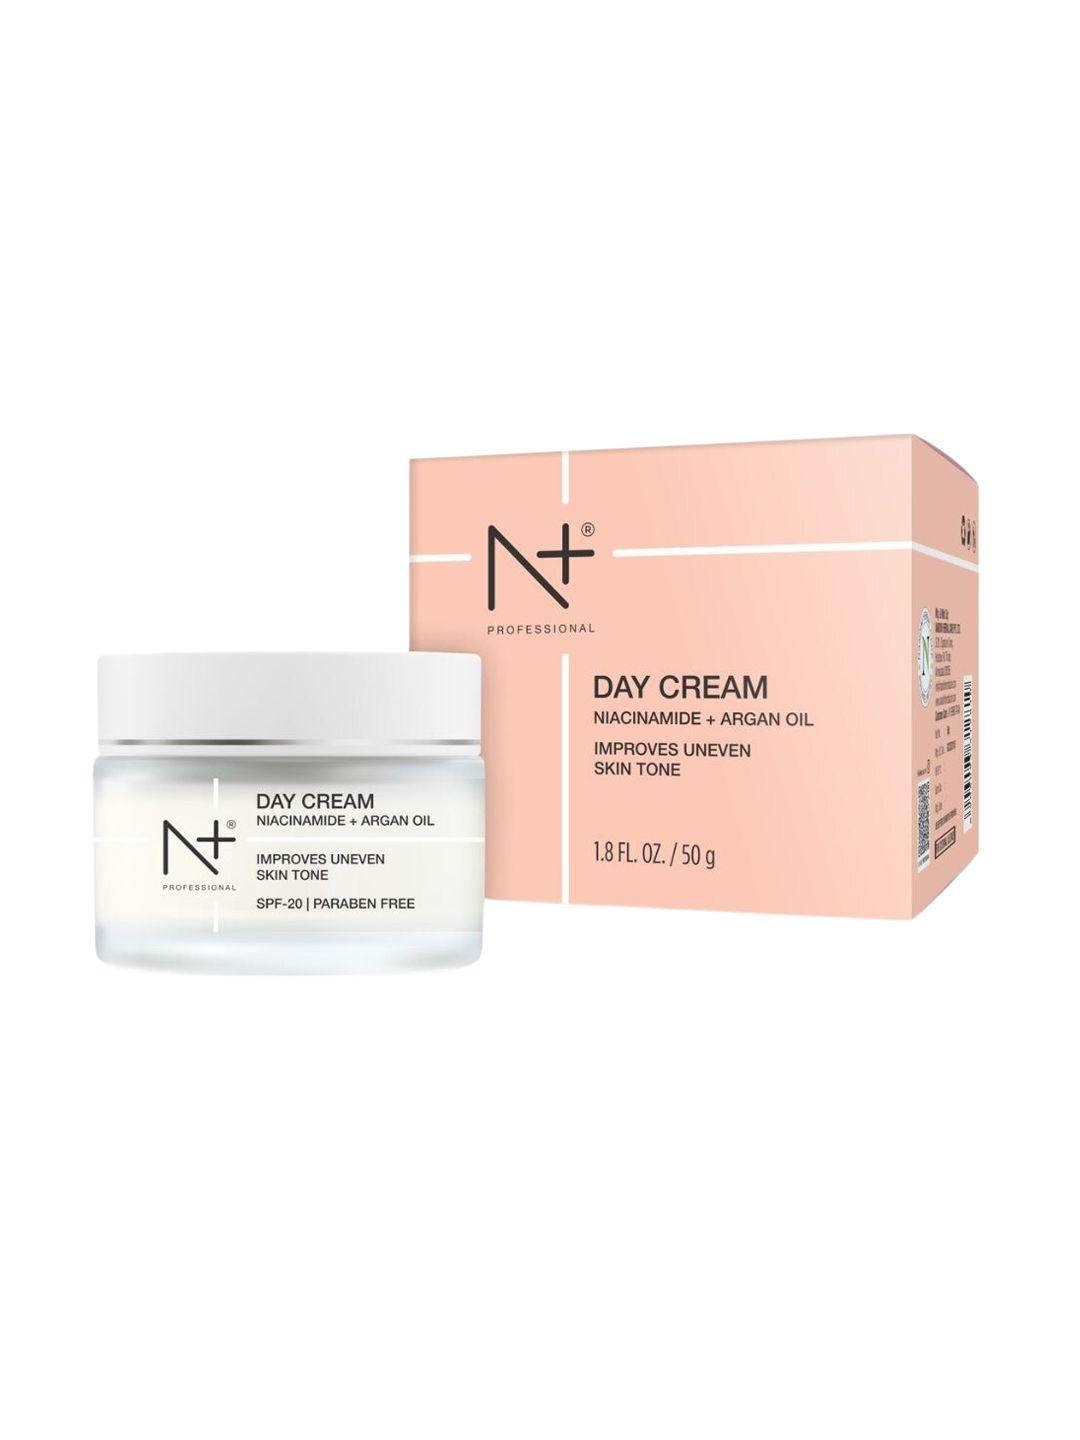 n plus professional niacinamide & argan oil day cream with spf 20 50g